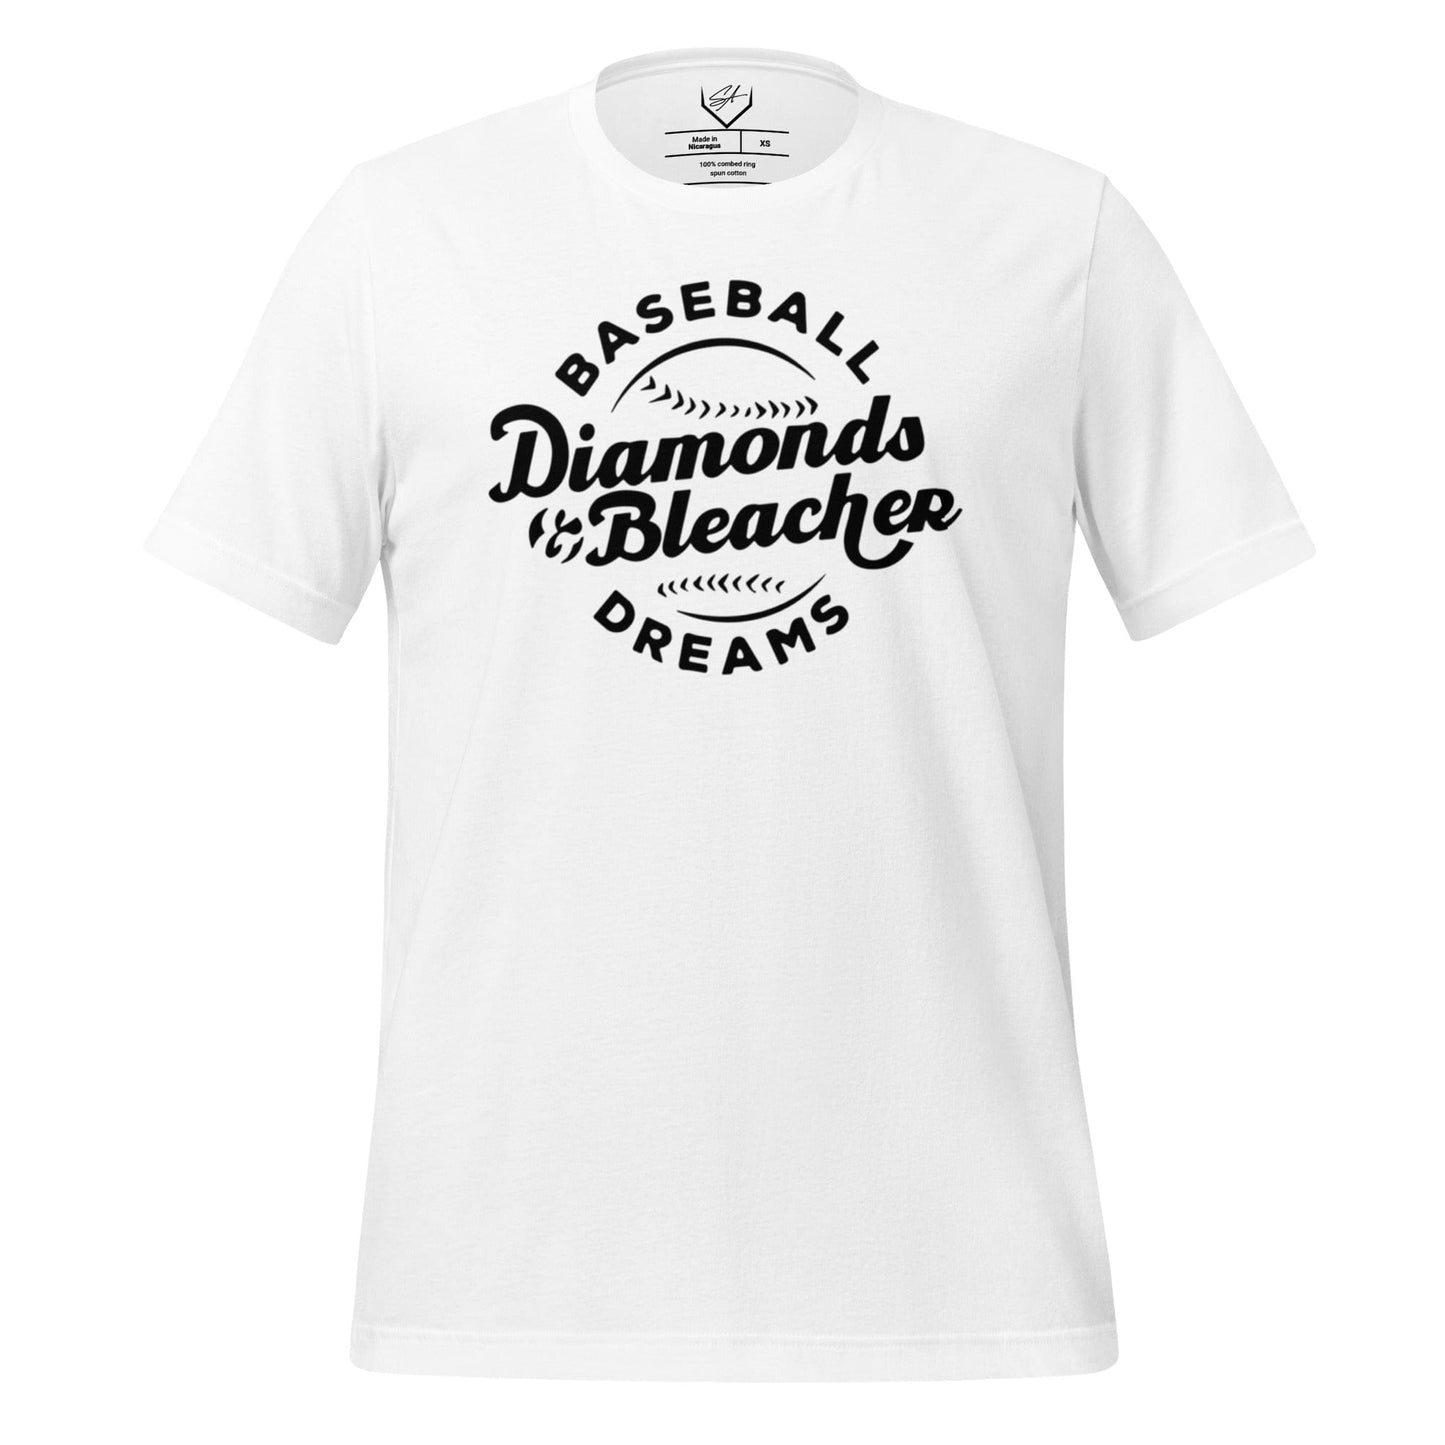 Baseball Diamonds And Bleacher Dreams - Adult Tee